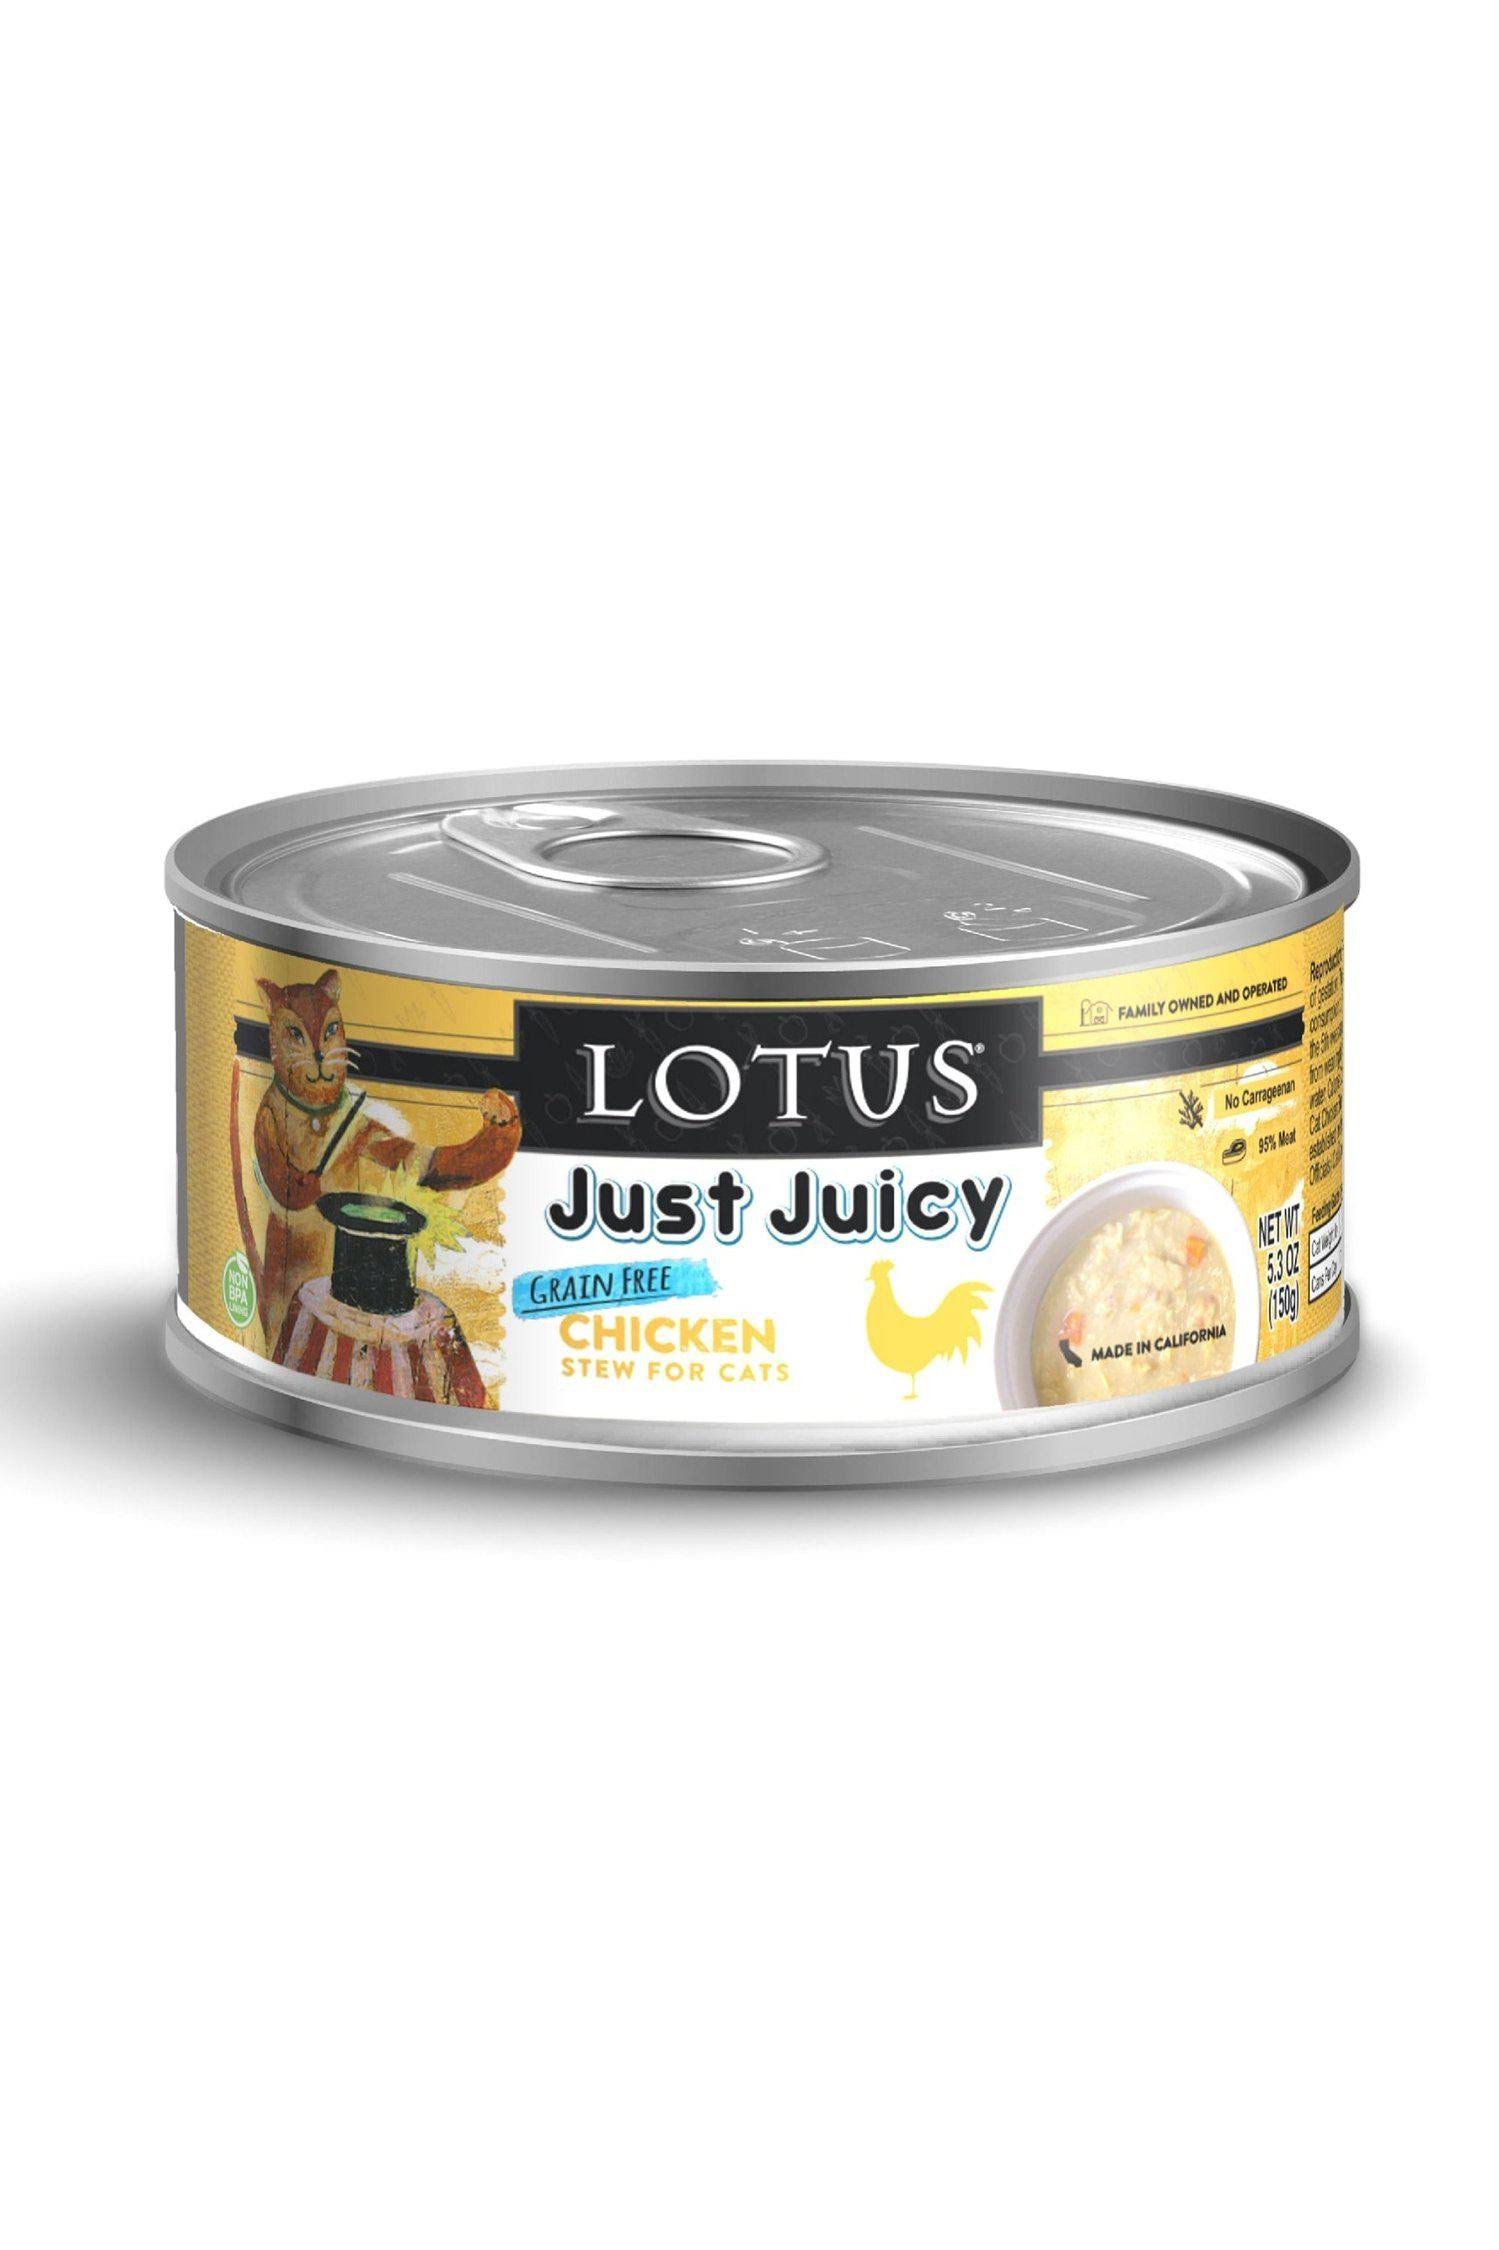 Lotus Just Juicy Chicken Stew Canned Cat Food 5.3oz